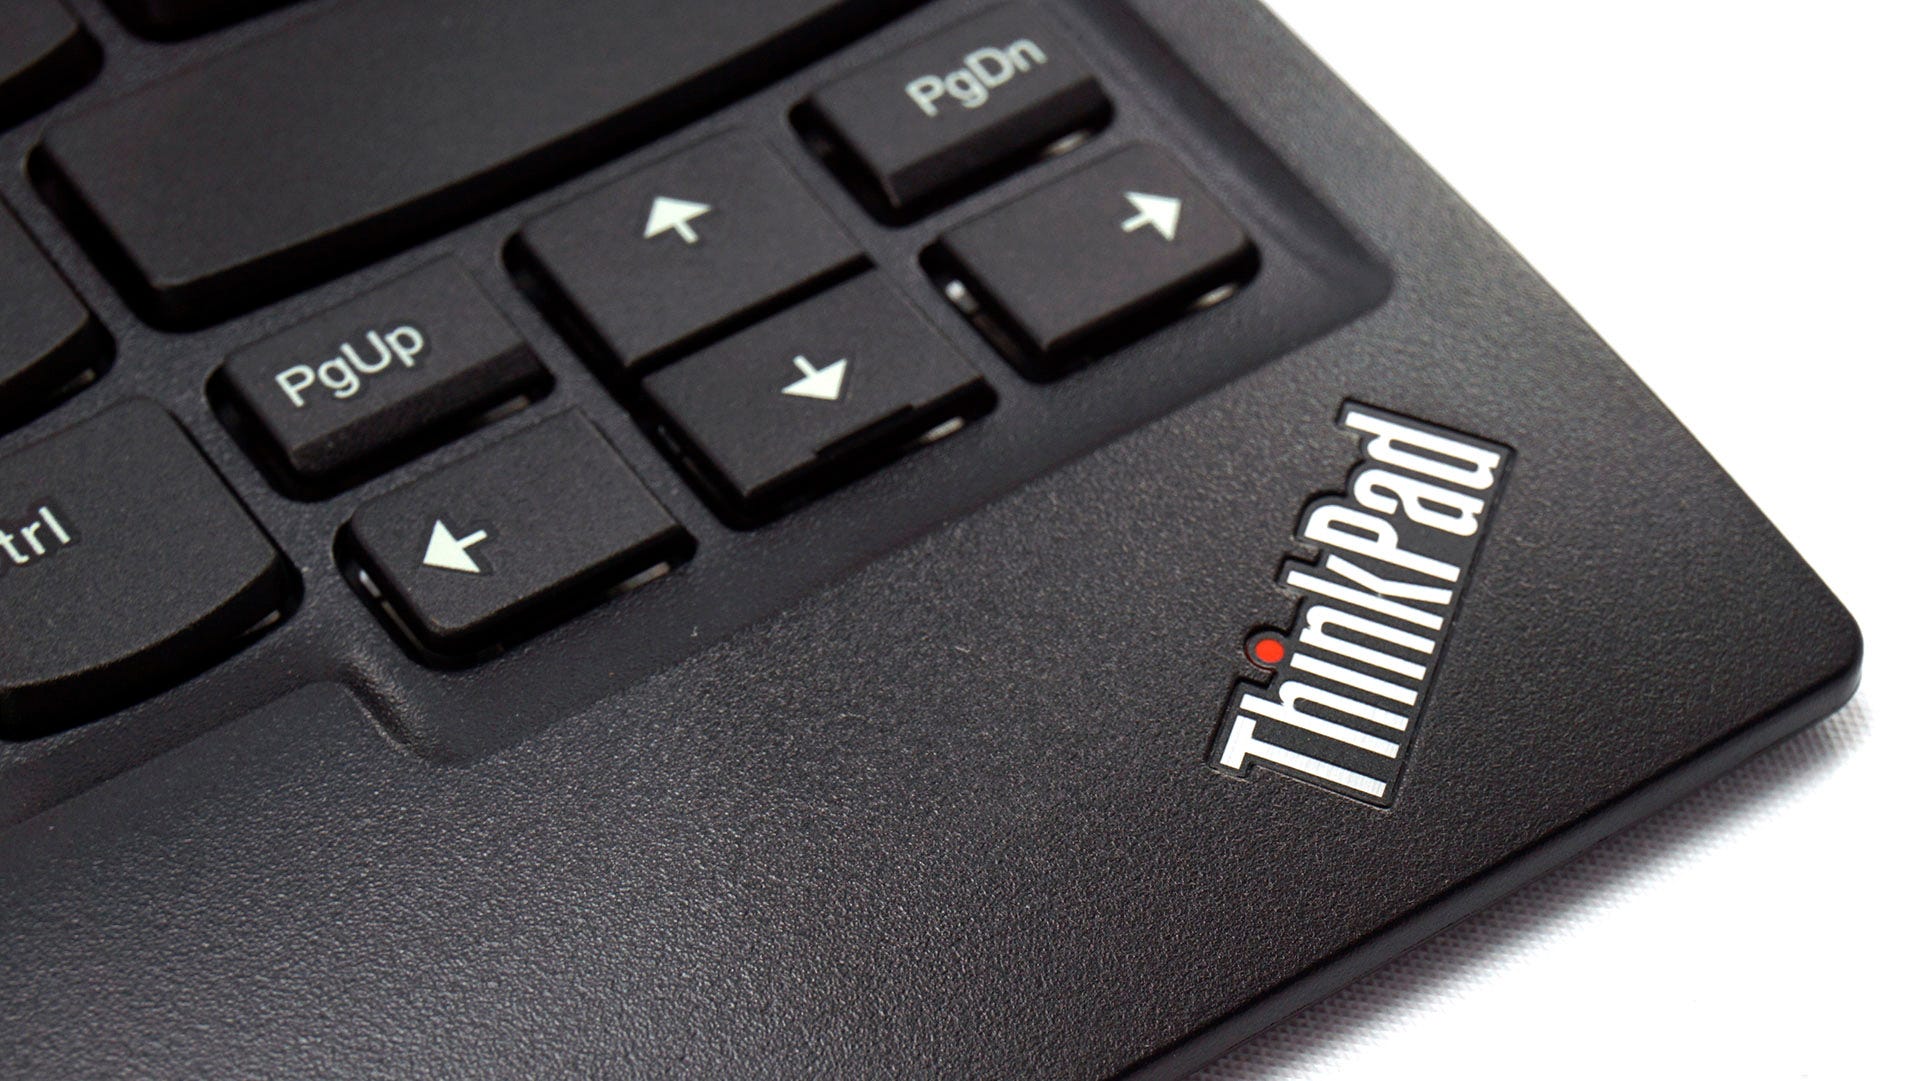 Logo ThinkPad di keyboard